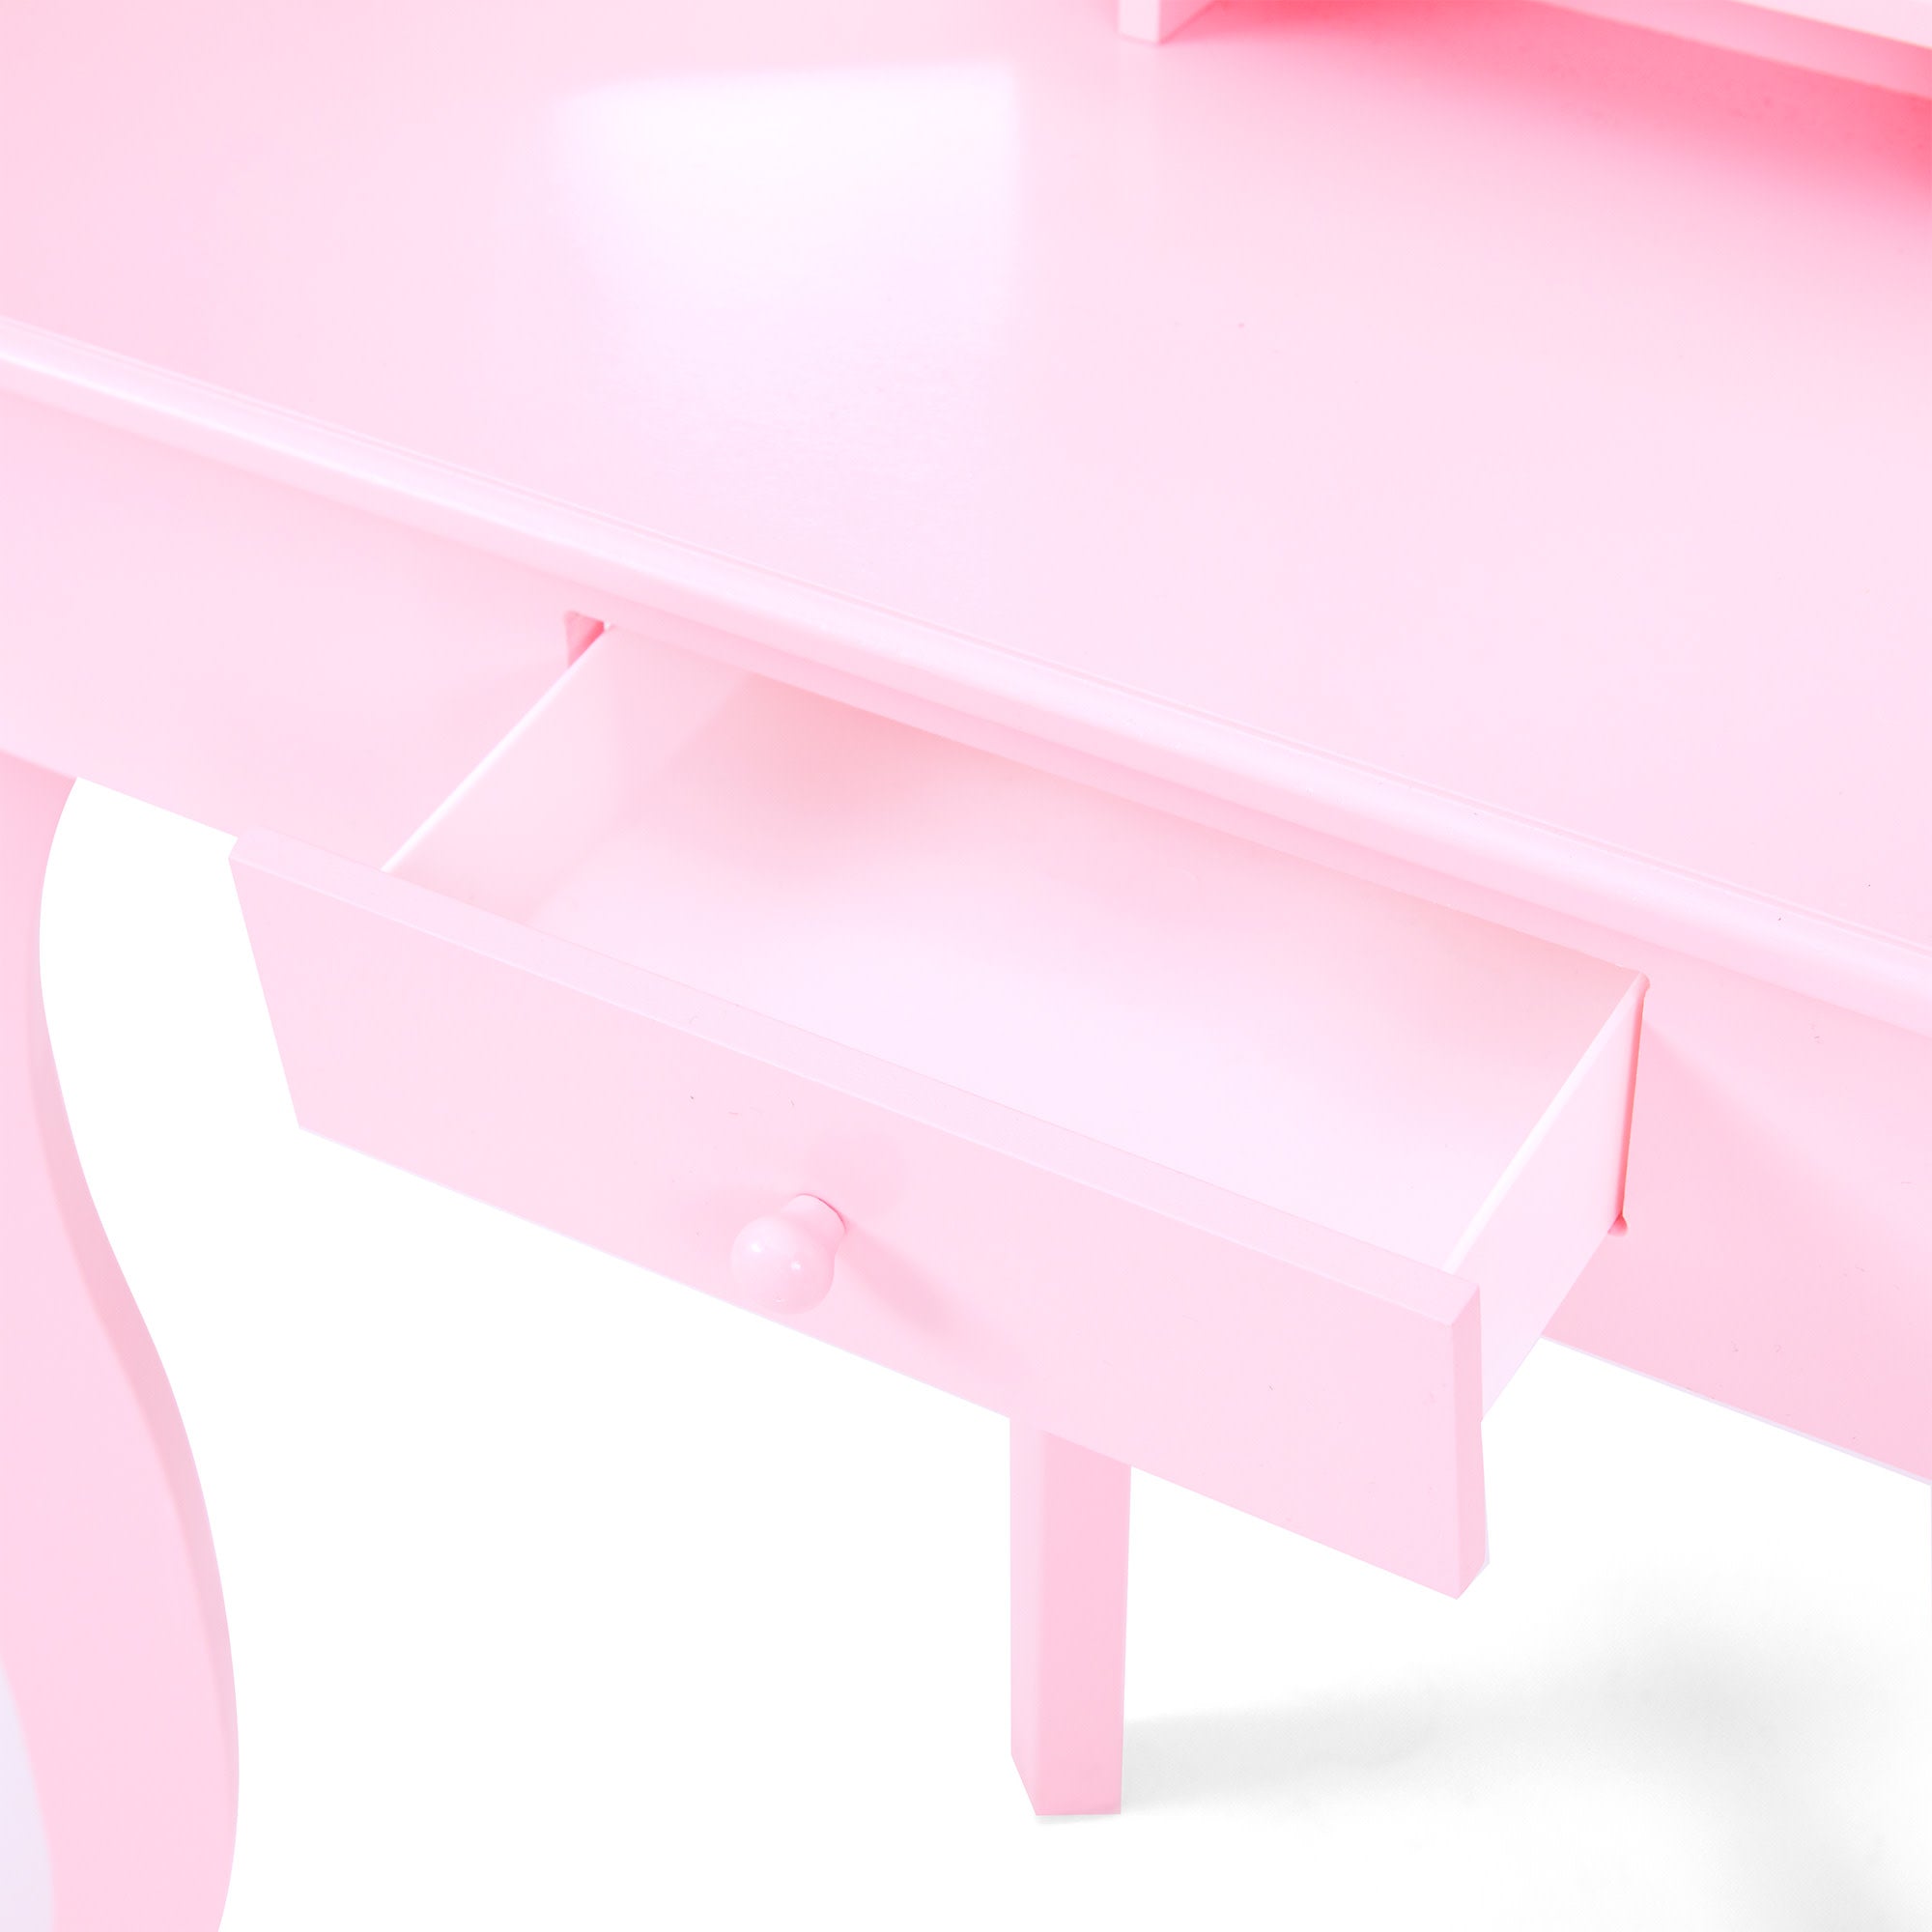 Fantasy Fields Kids Little Lady Alessandra Wooden Corner Vanity Desk and Stool Set, Pink